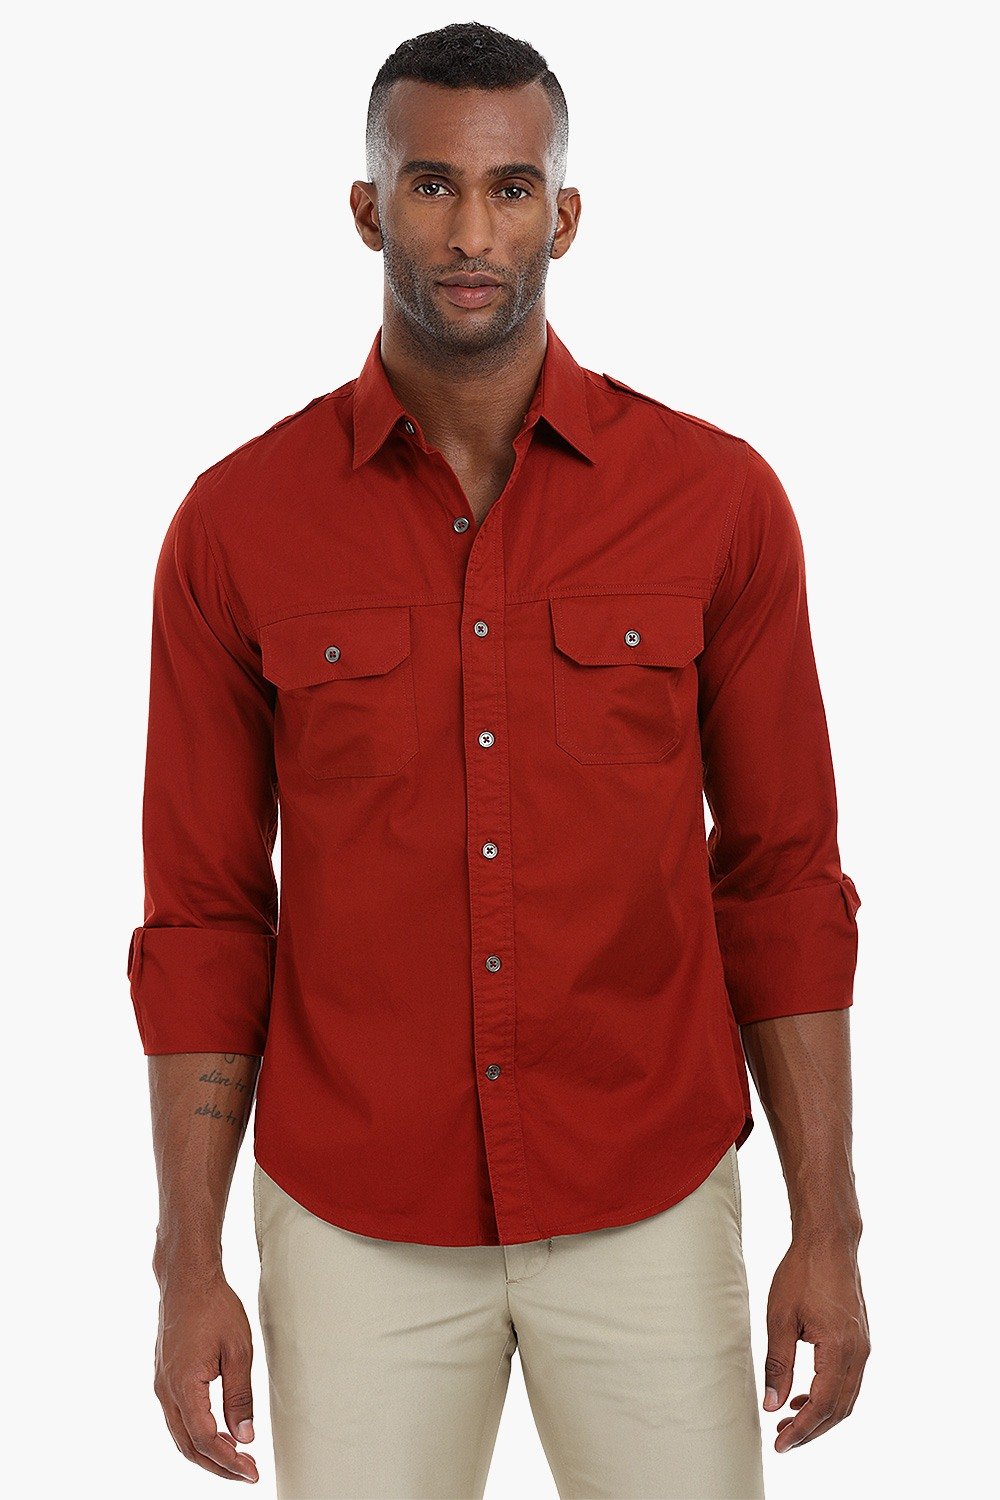 safari style shirt mens